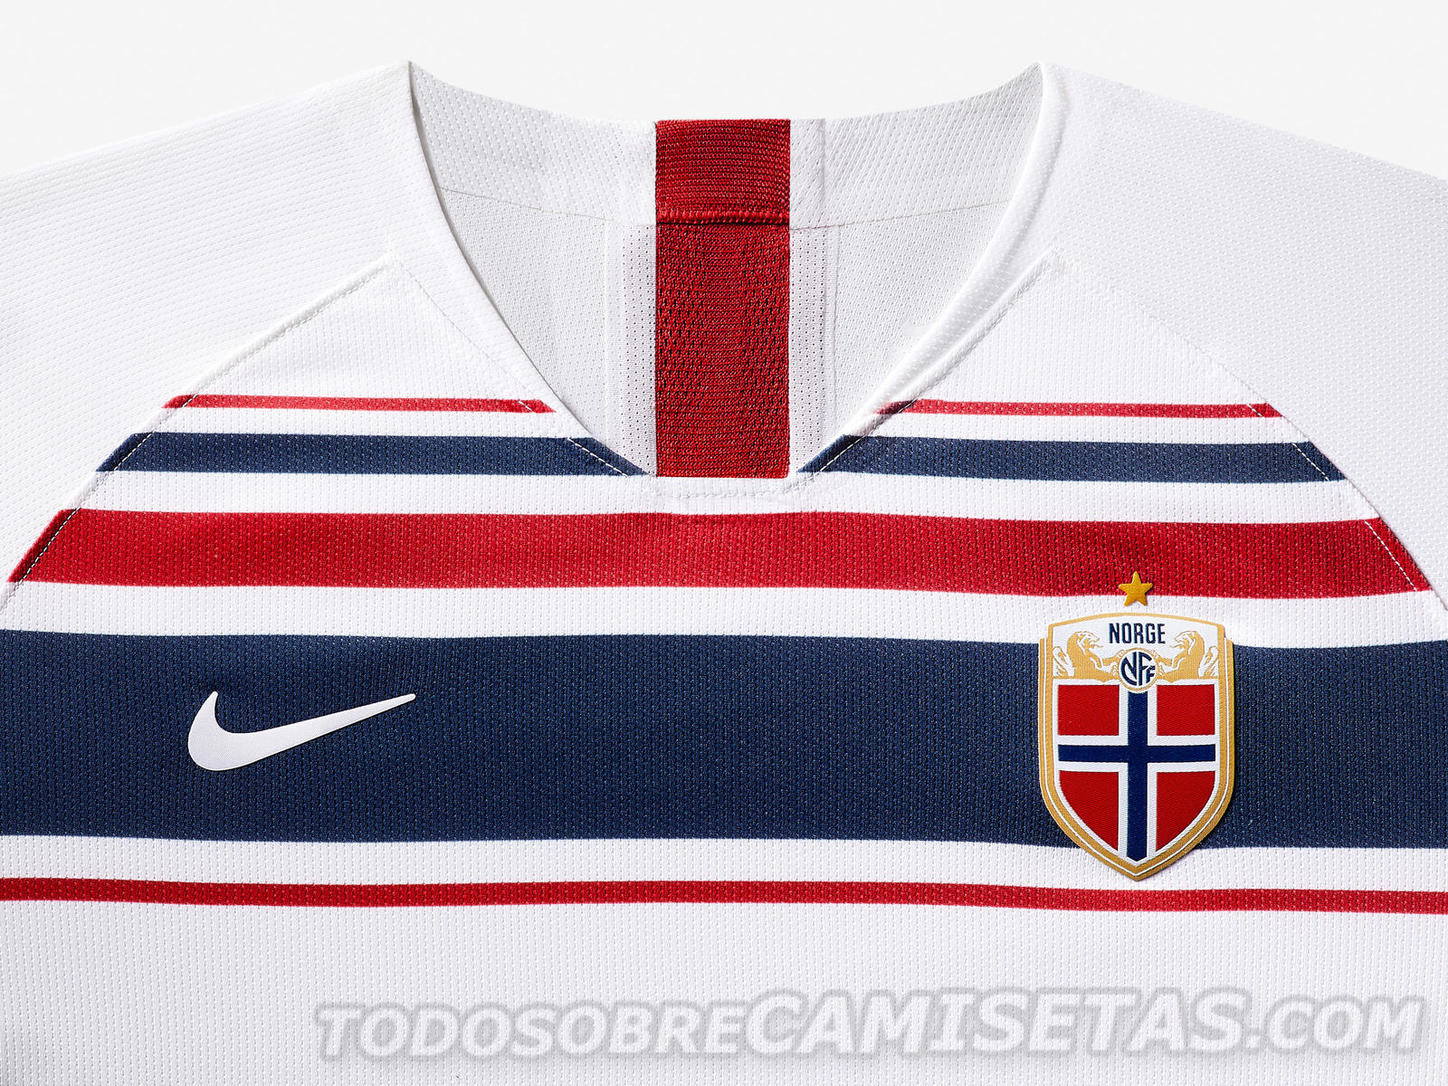 Norway 2019 Women’s World Cup Nike Kits